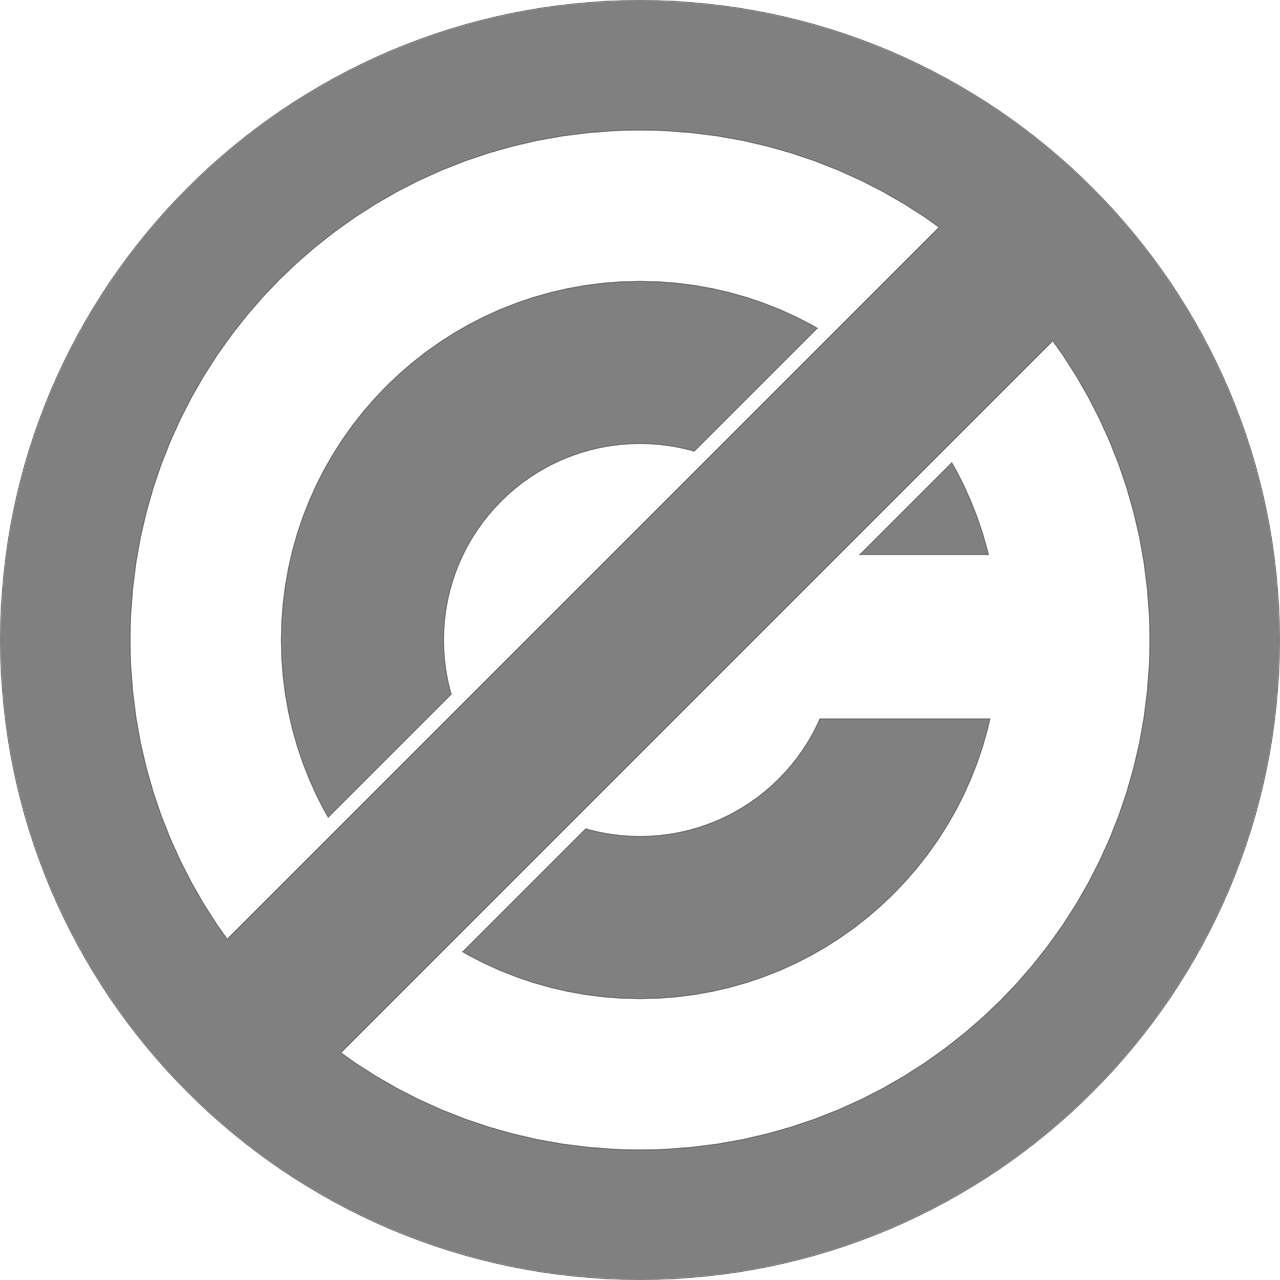 cc0 license icon free photo